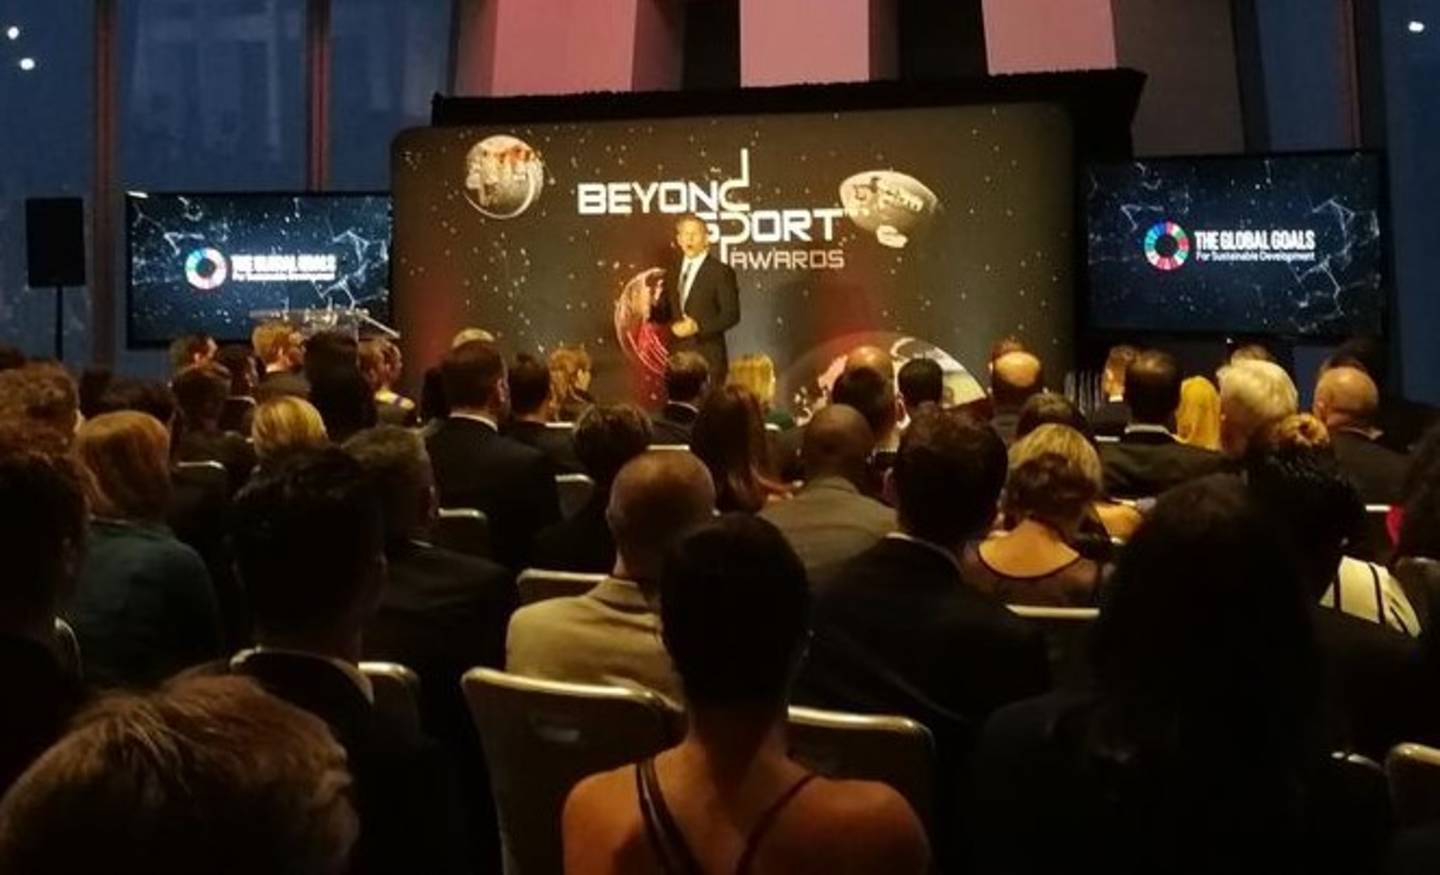 Beyond Sports Global Awards ceremony